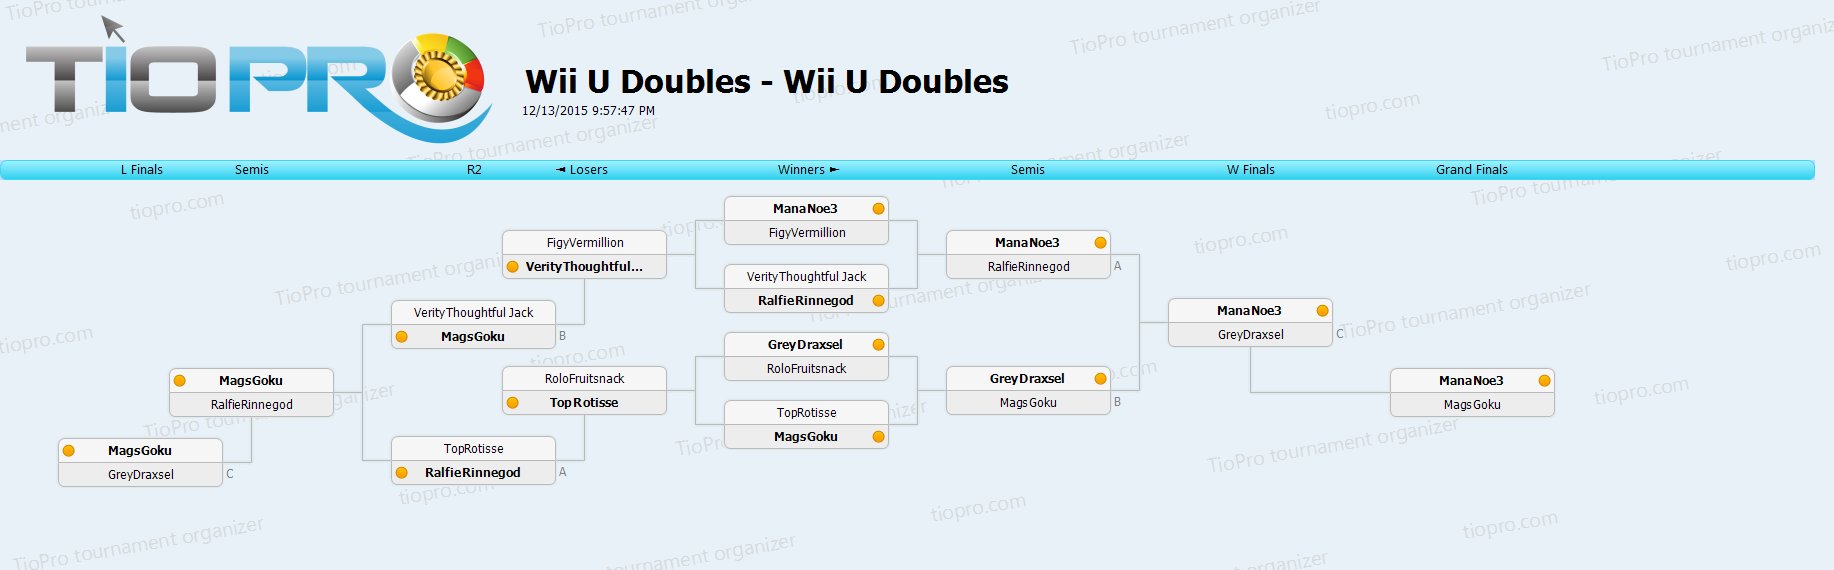 SSB10 Wii U Doubles